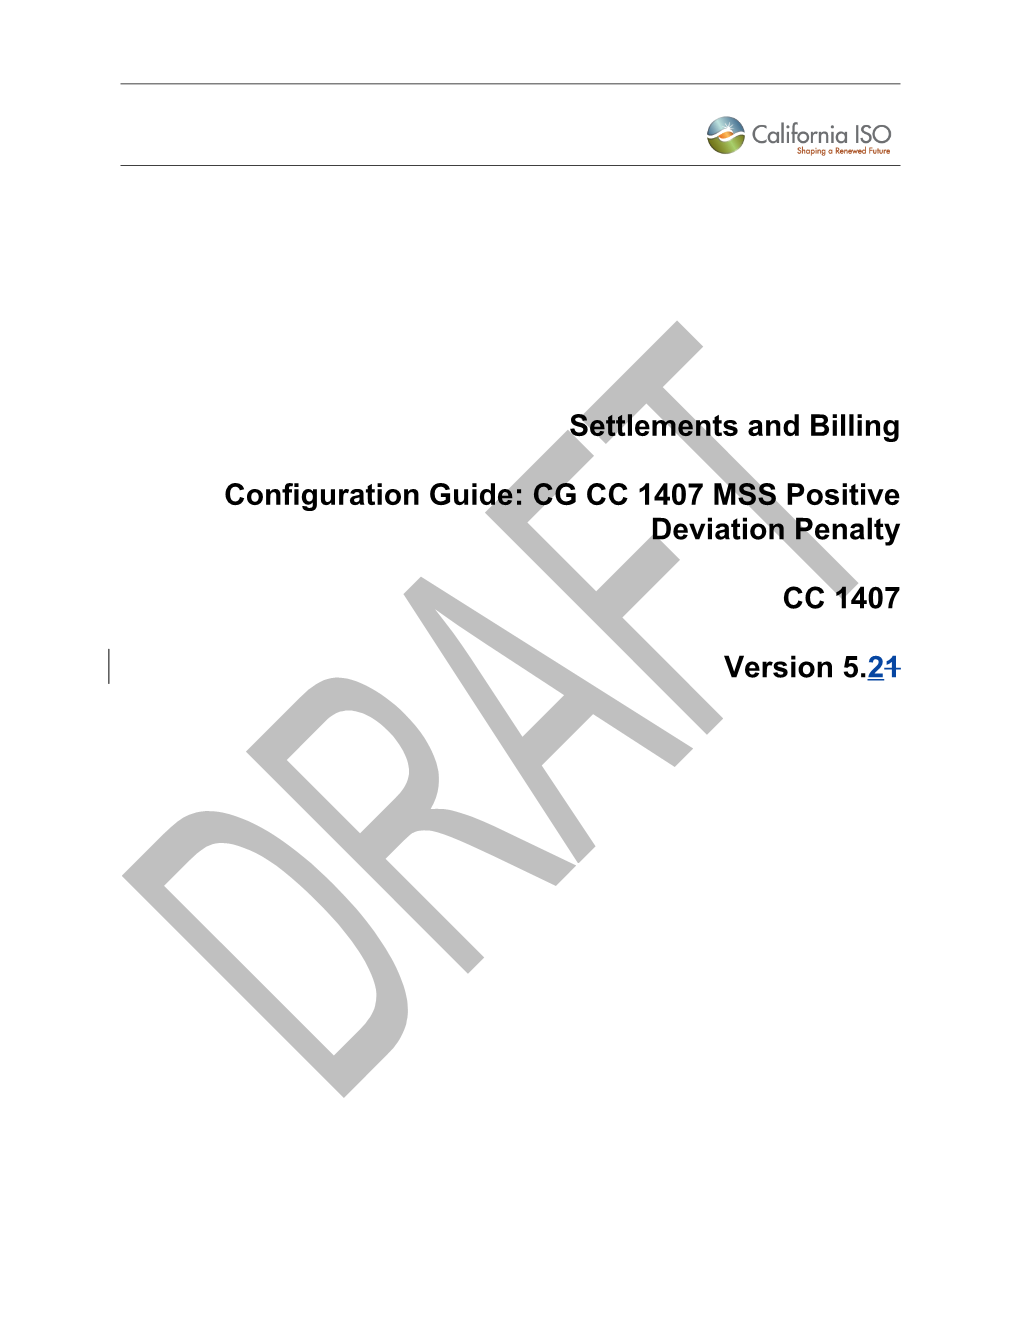 CG CC 1407 MSS Positive Deviation Penalty